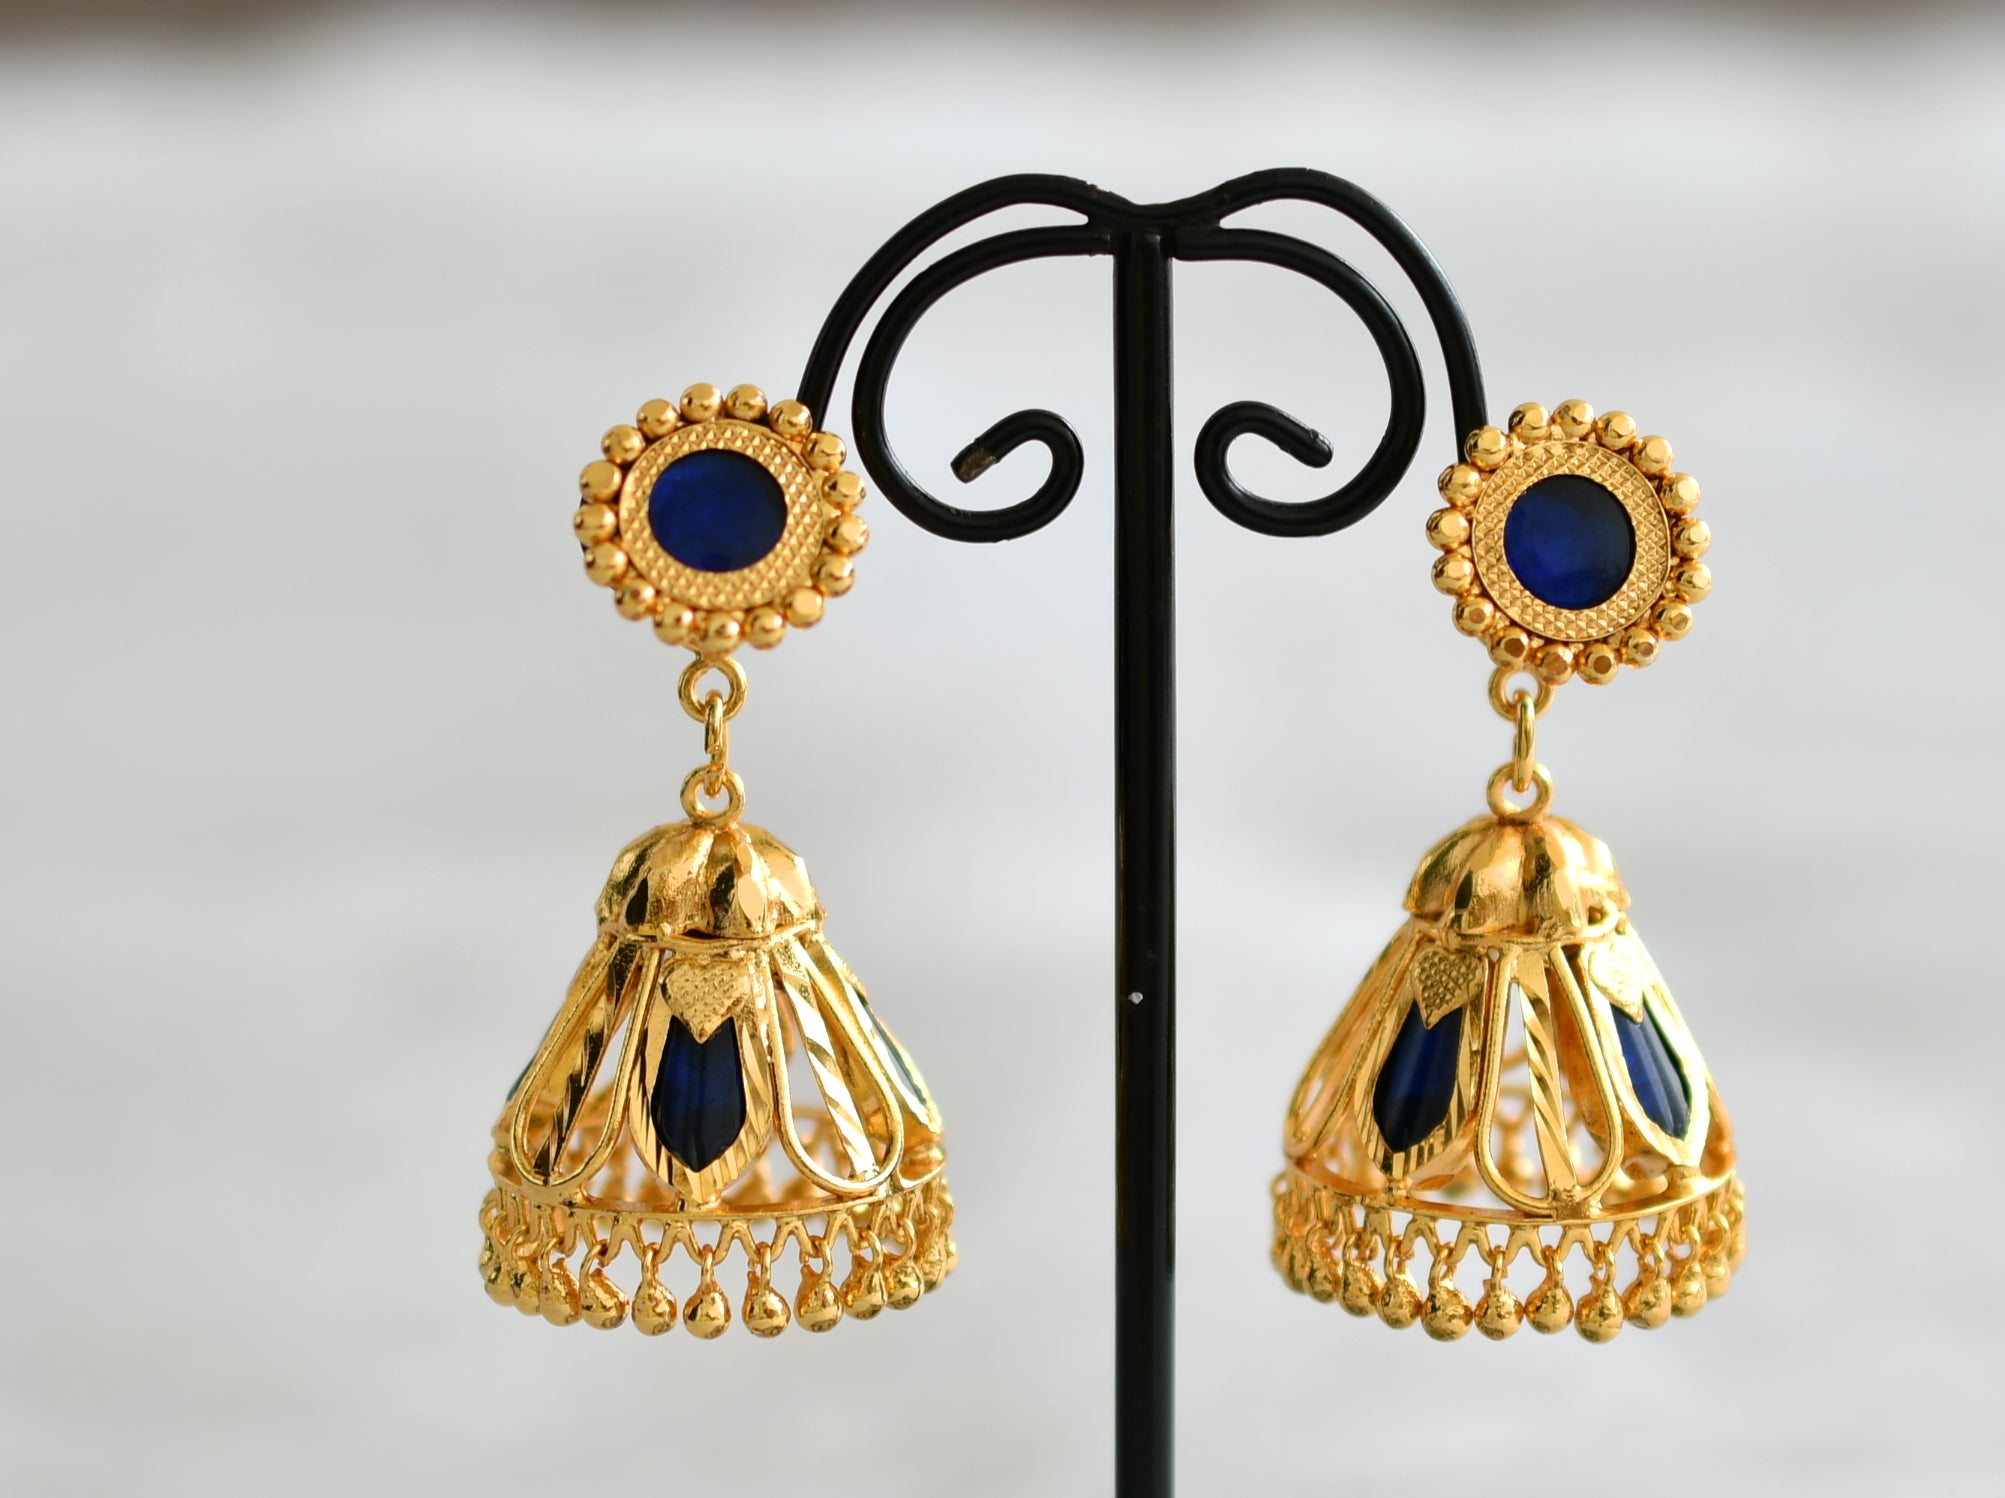 Discover more than 185 kerala model earrings super hot